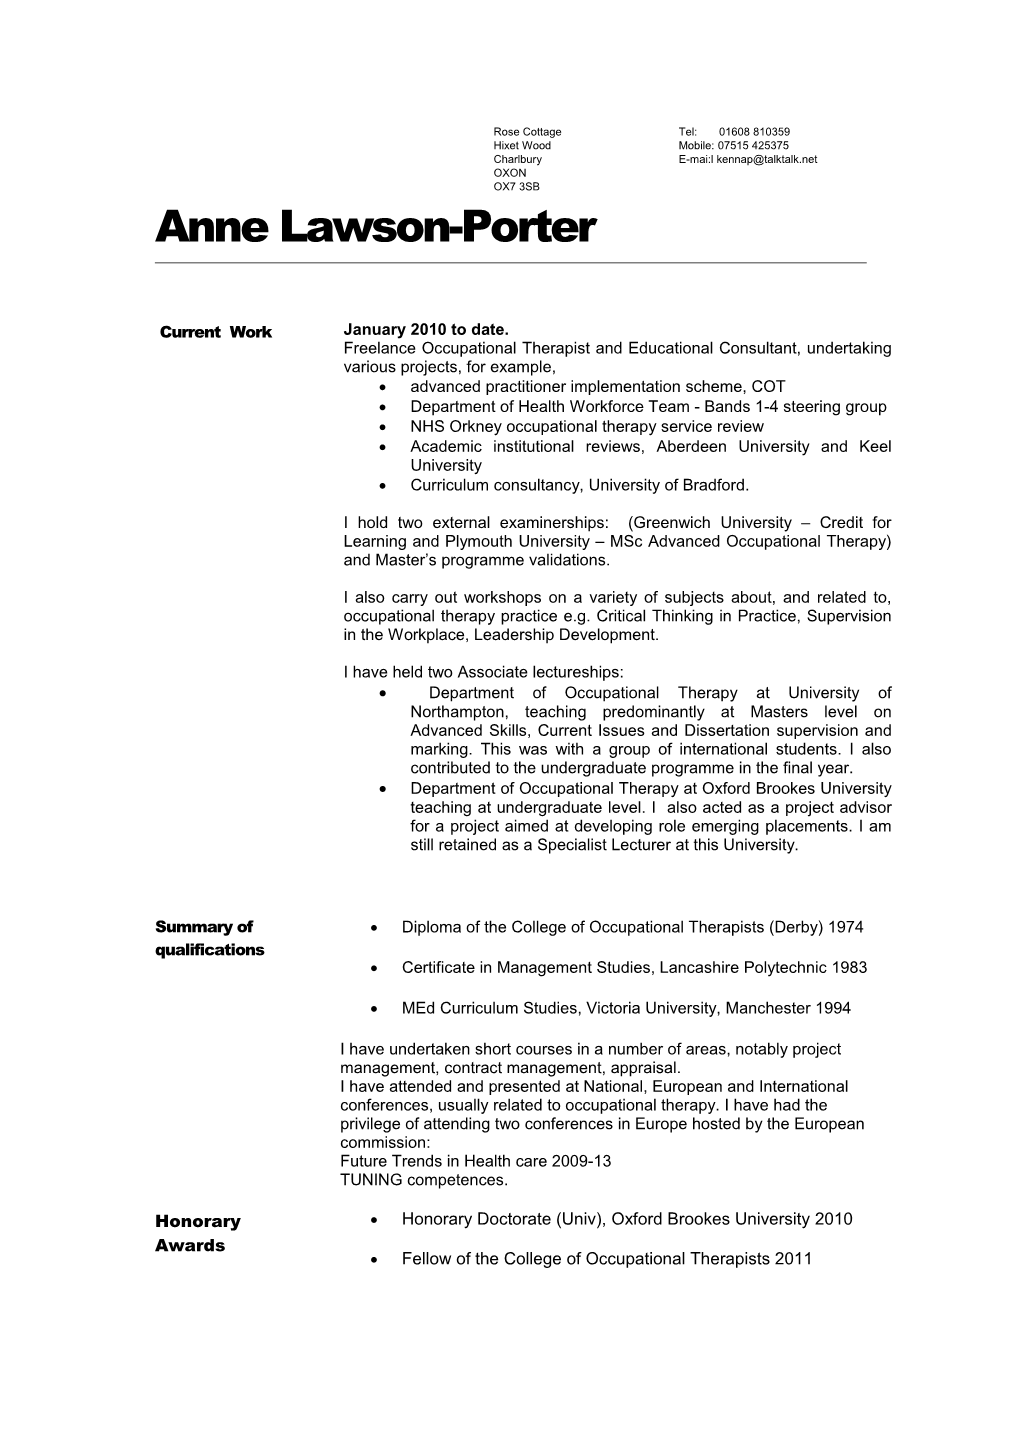 Anne Lawson-Porter